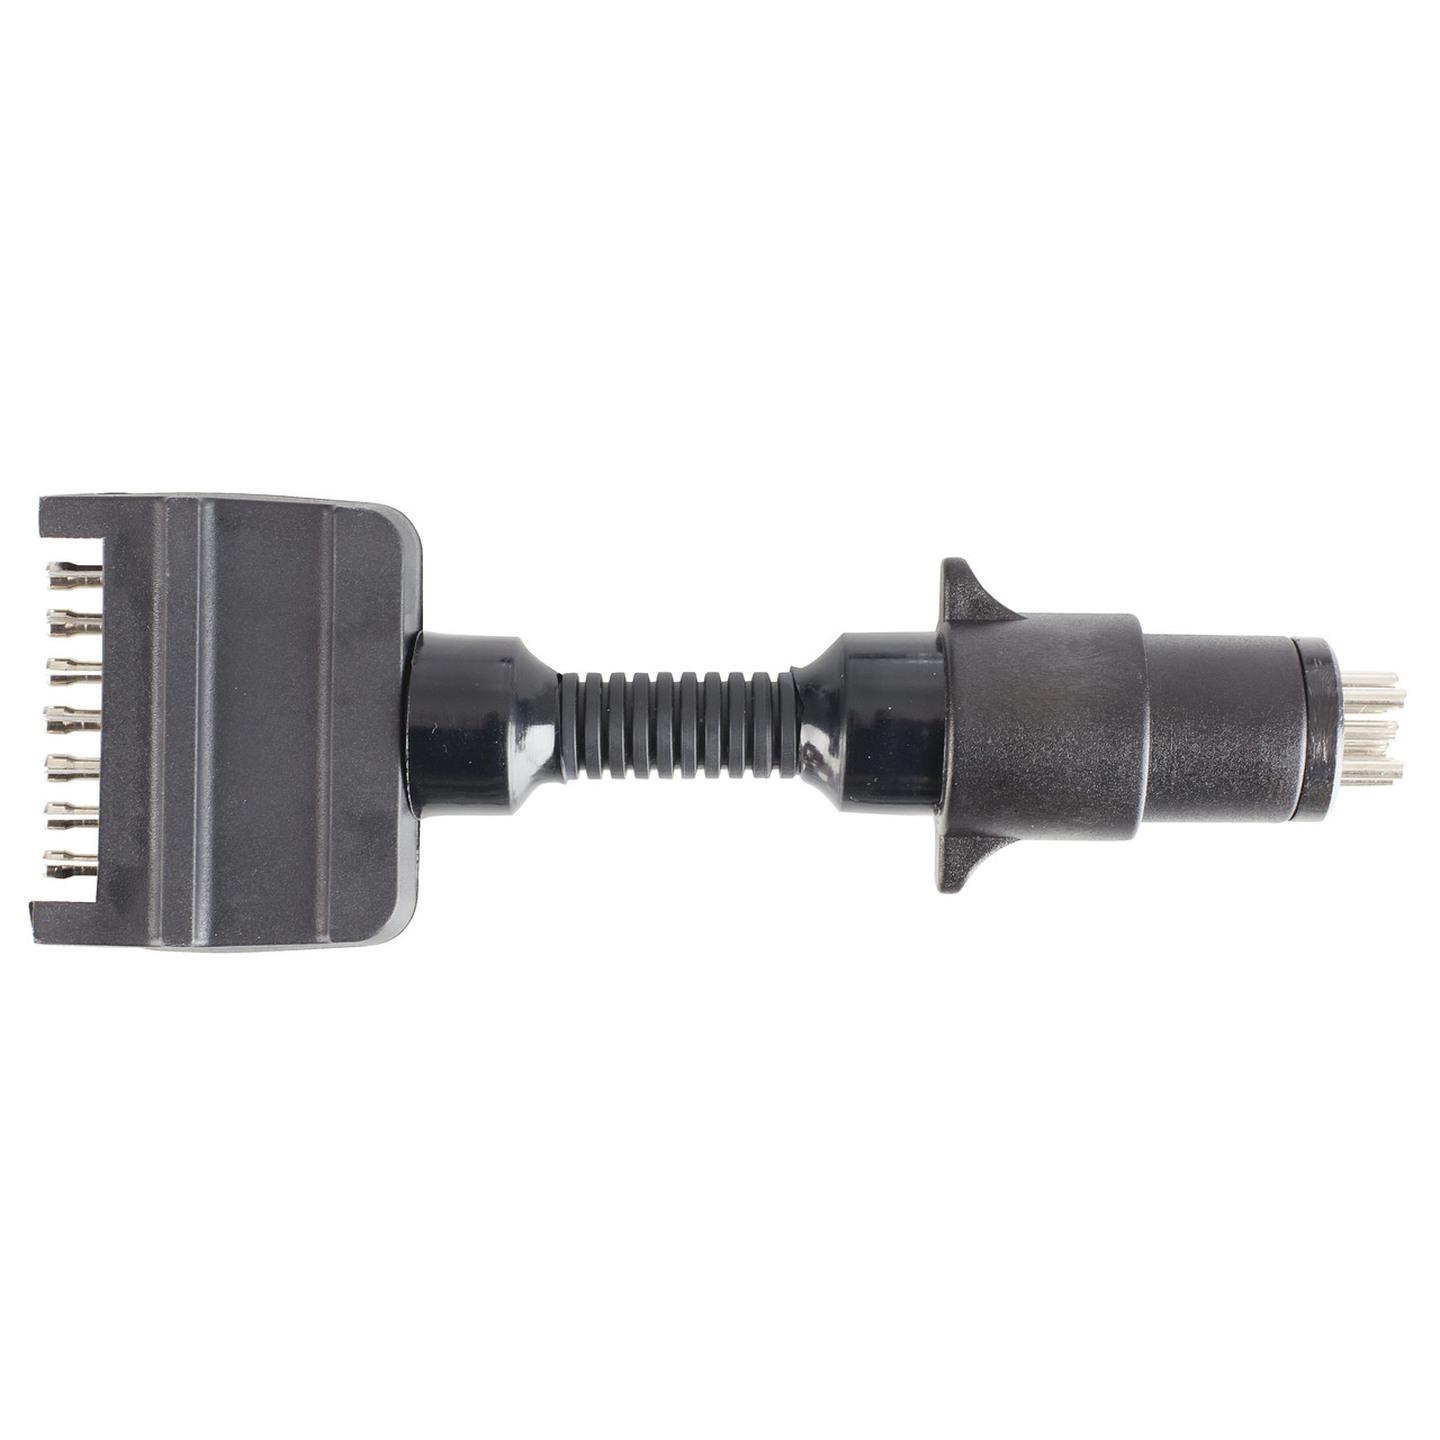 Trailer Adaptor - 7 Pin Flat Plug to 7 Pin Small Round Socket